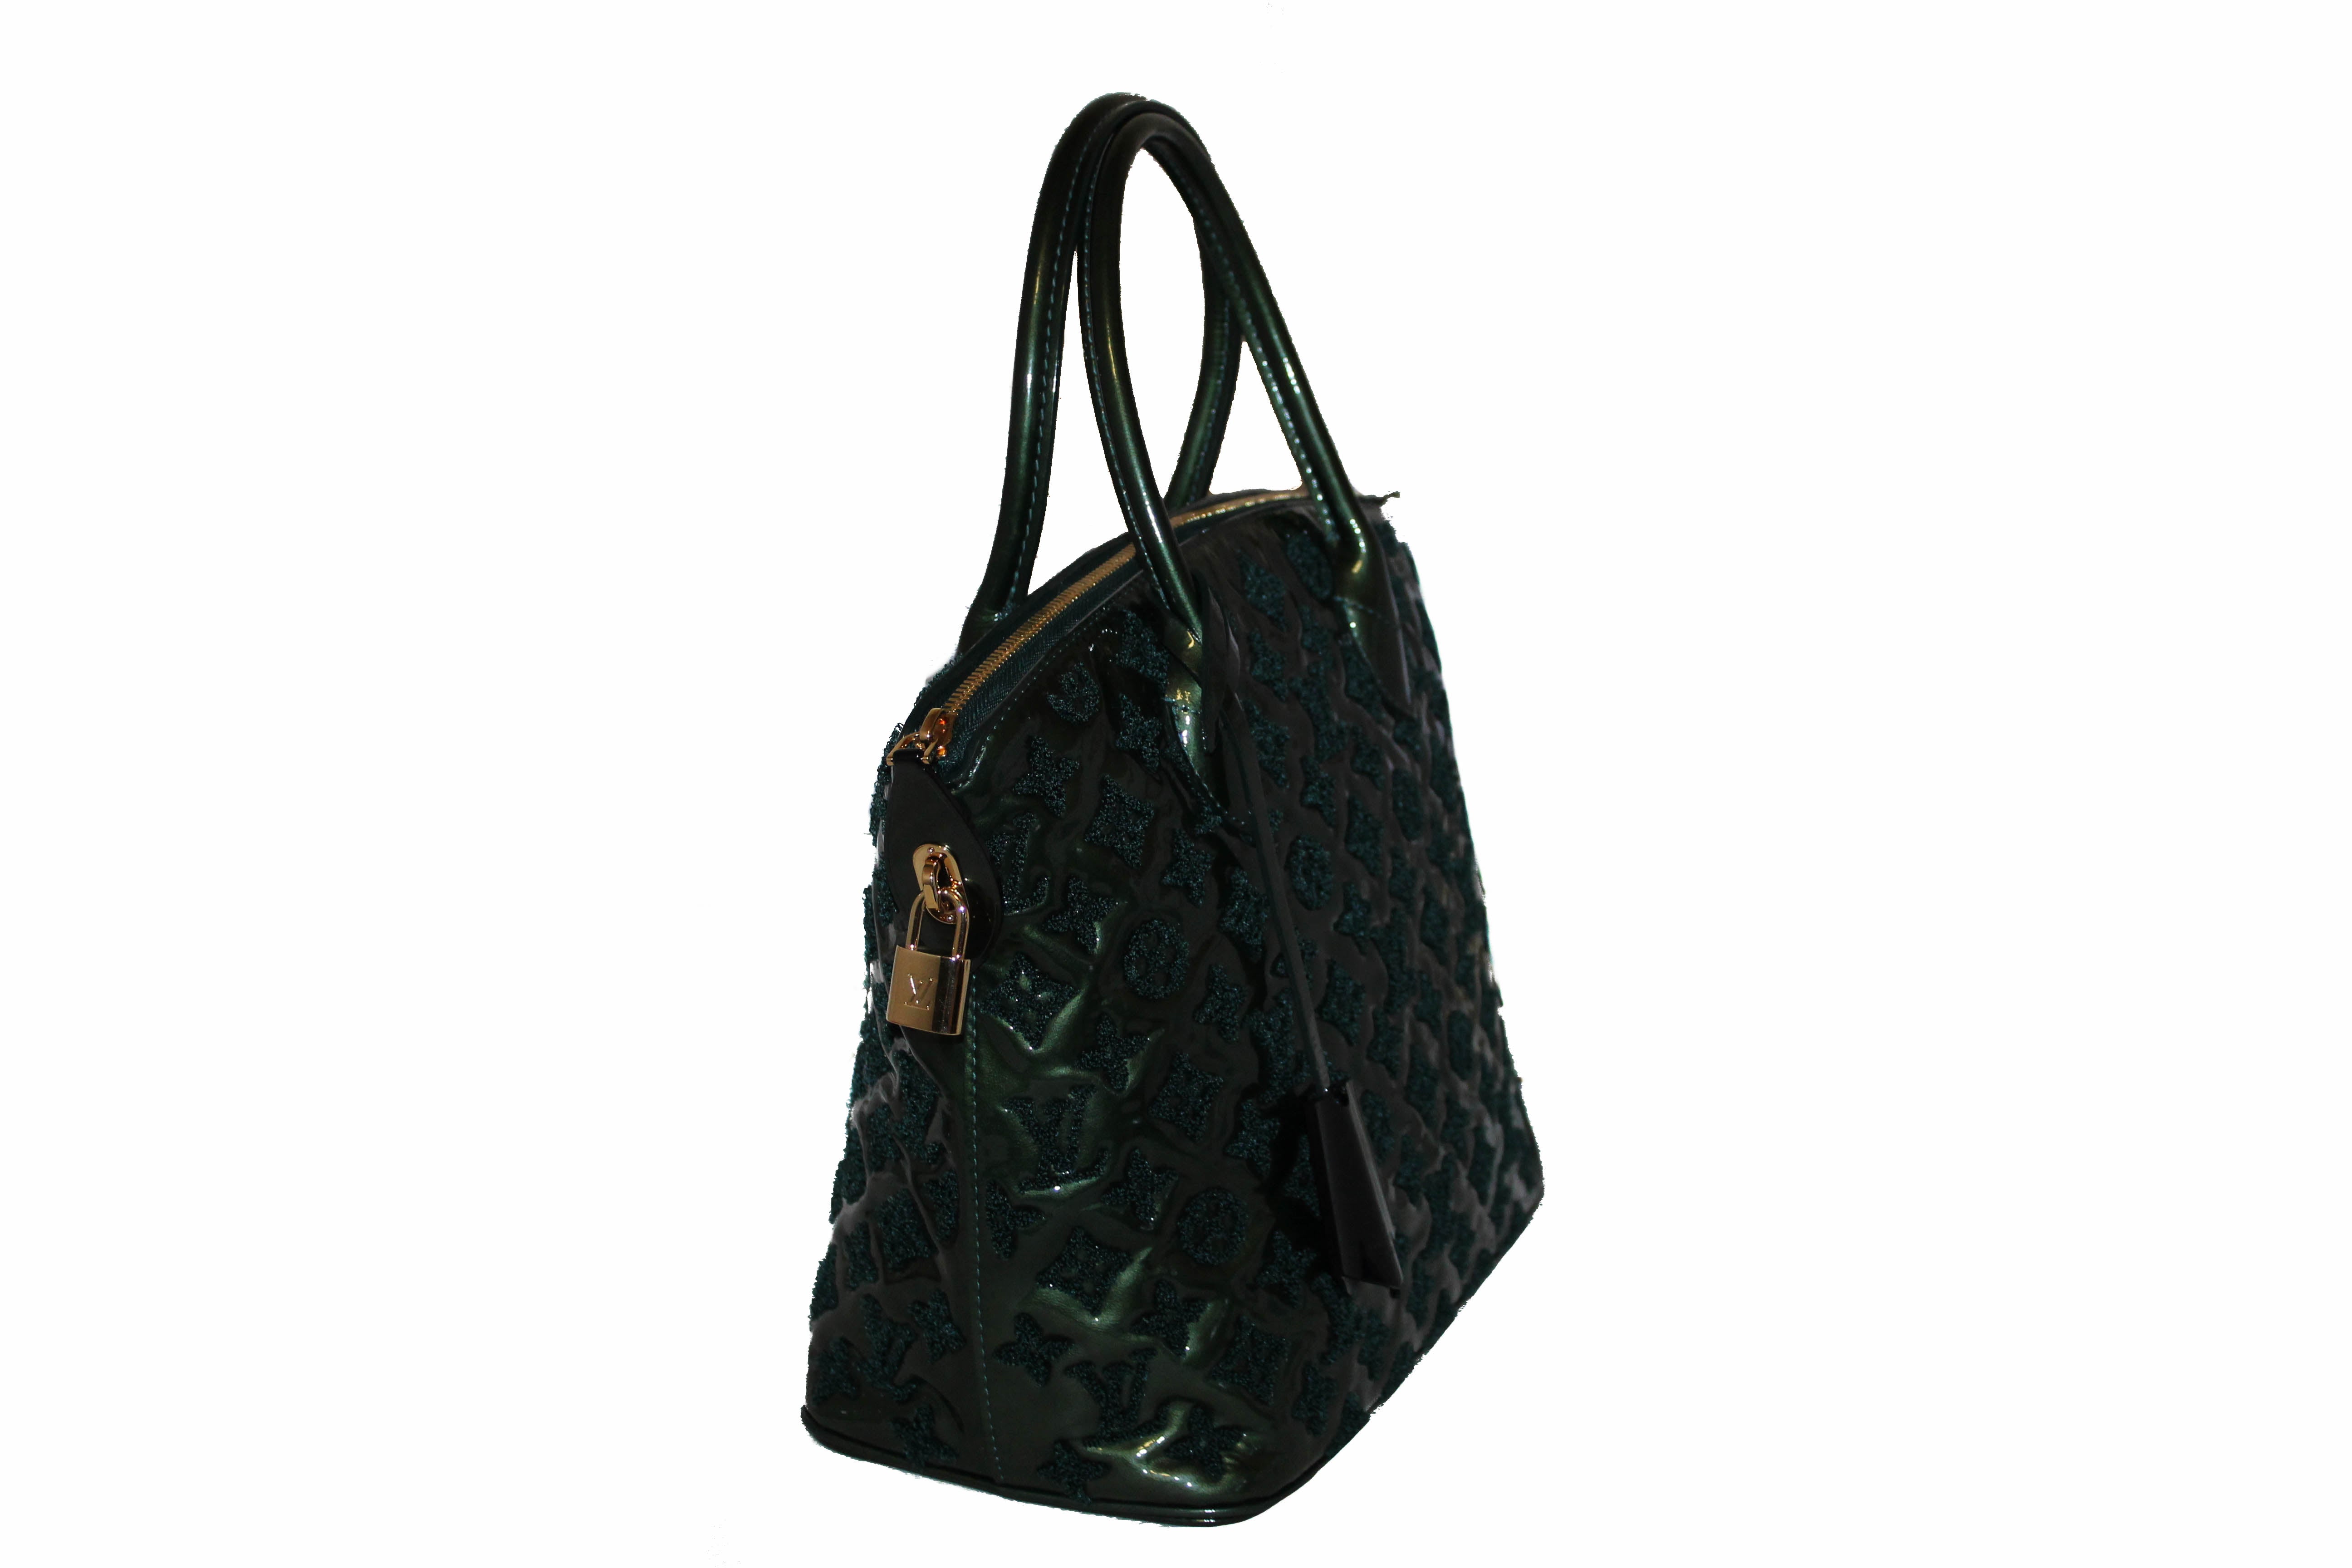 Sold at Auction: Vuitton L/E Green Monogram Fascination Lockit Bag